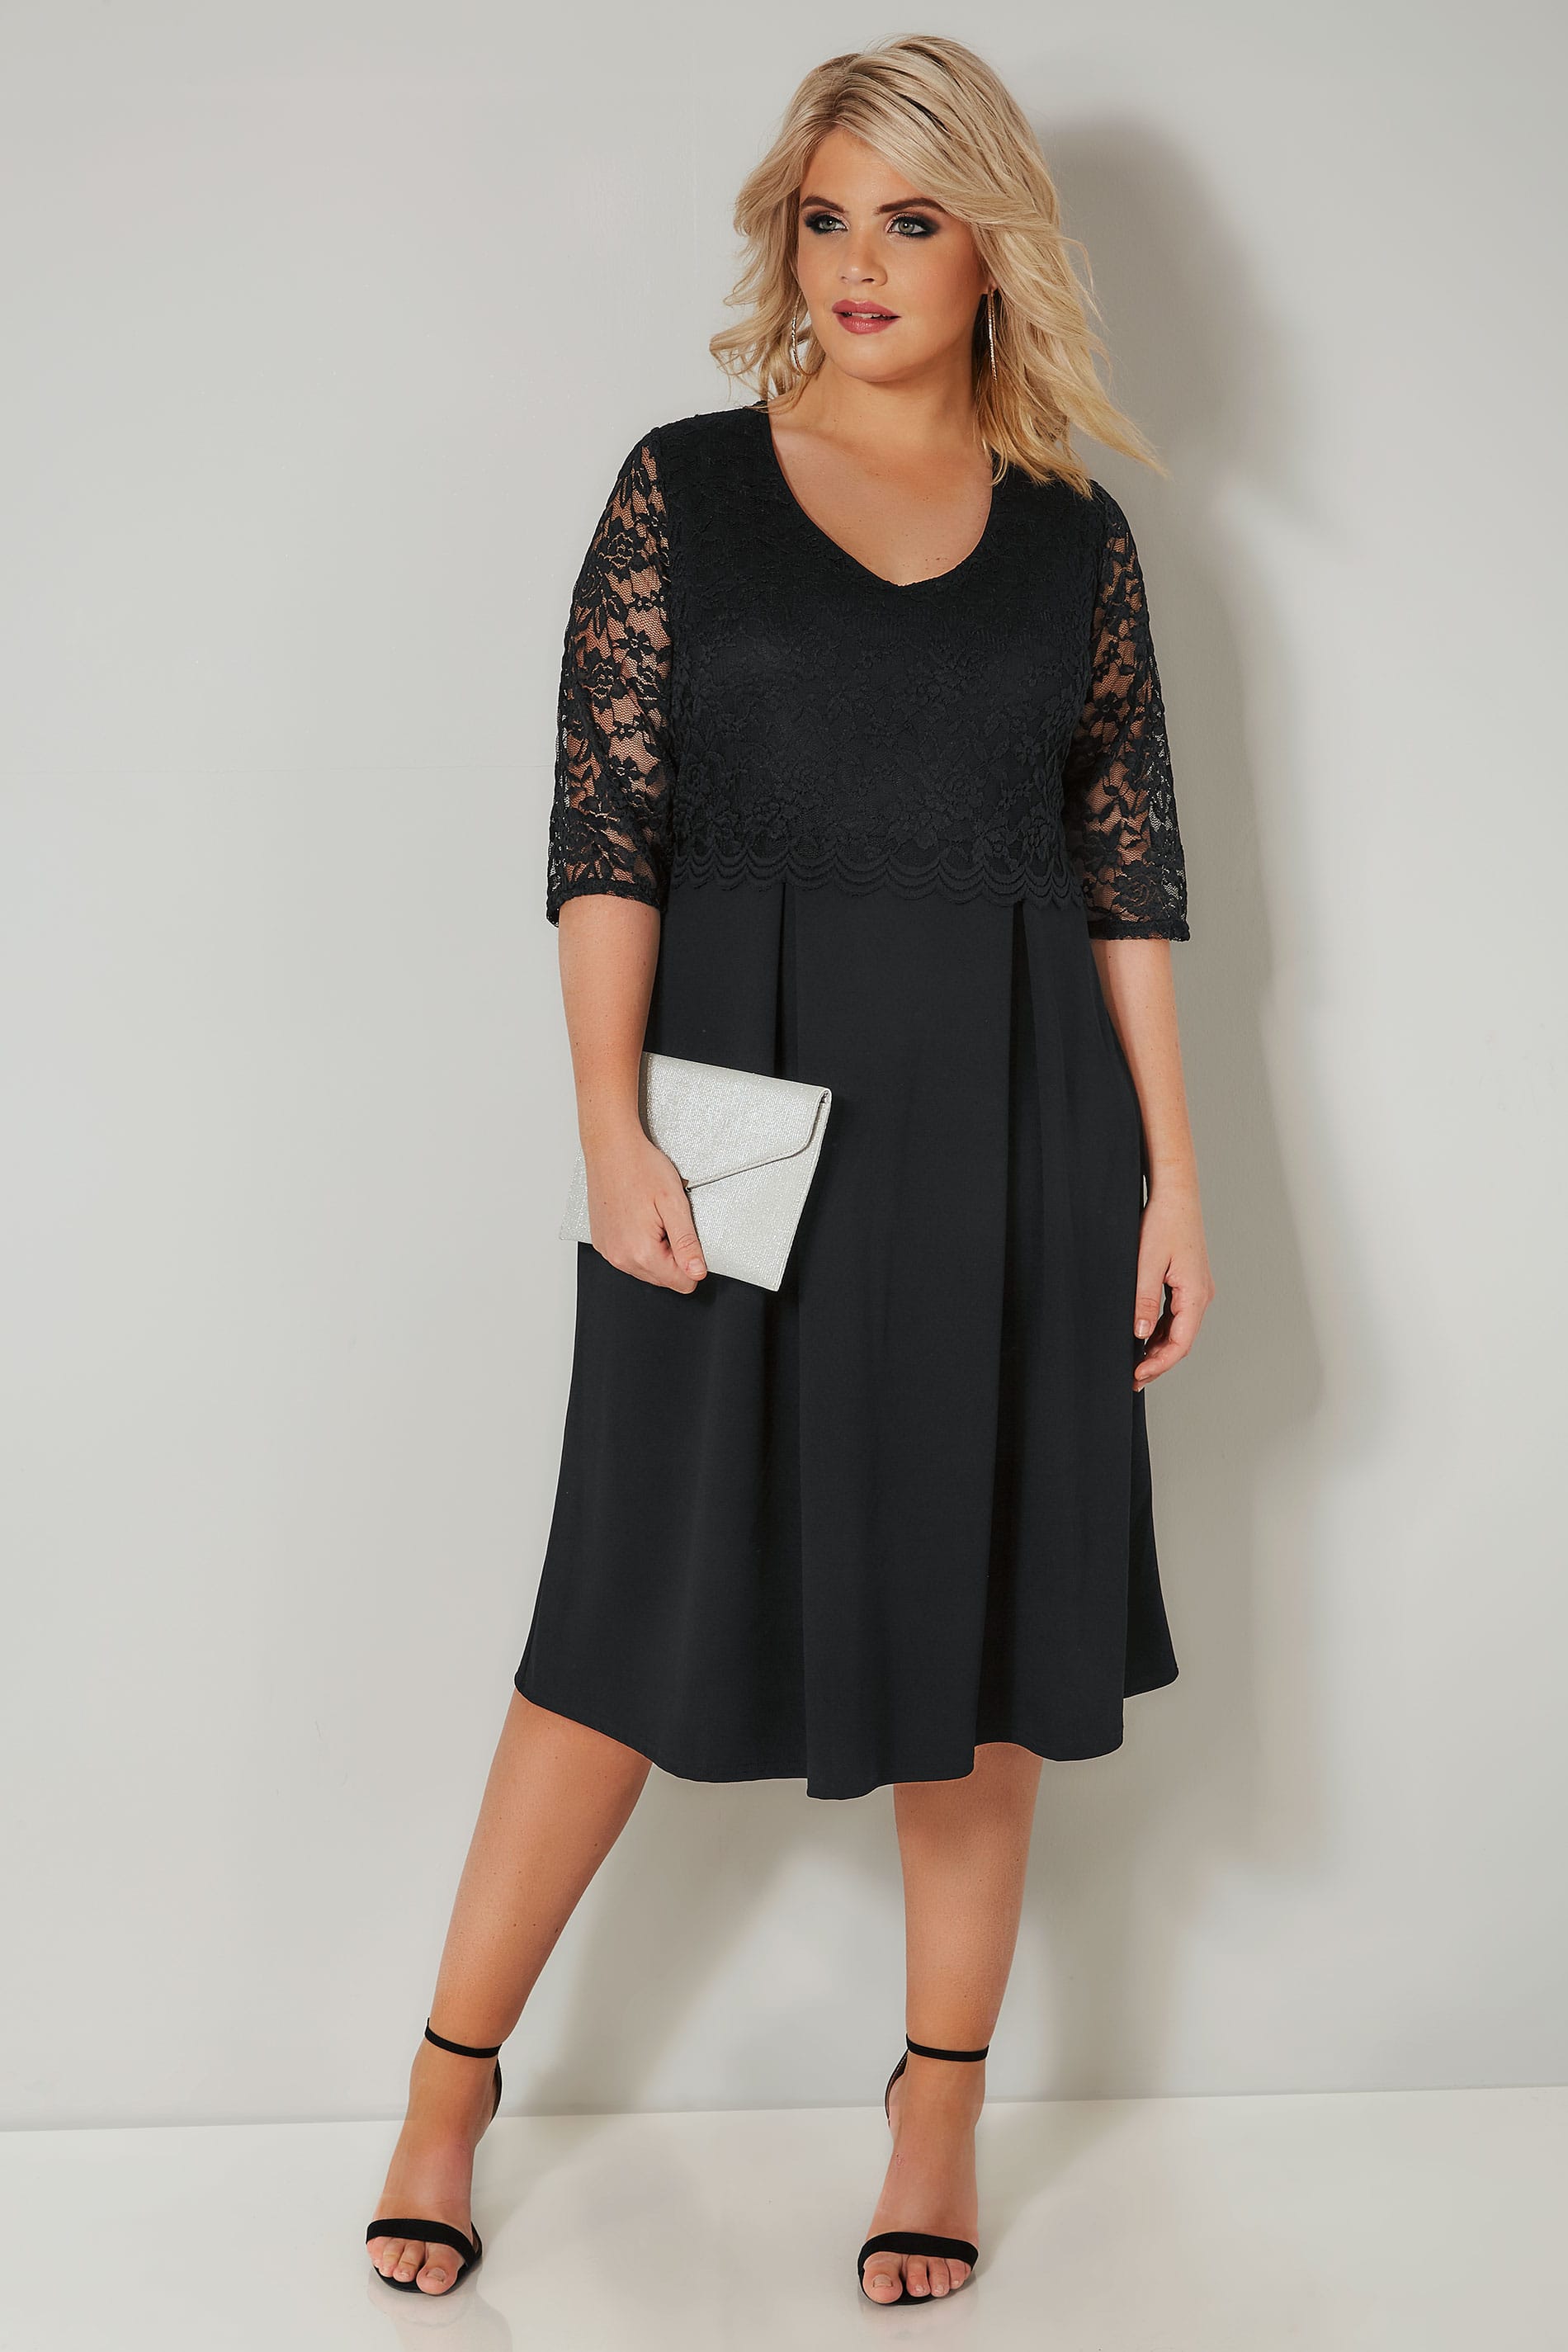 YOURS LONDON Black Lace Midi Dress, plus size 16 to 32